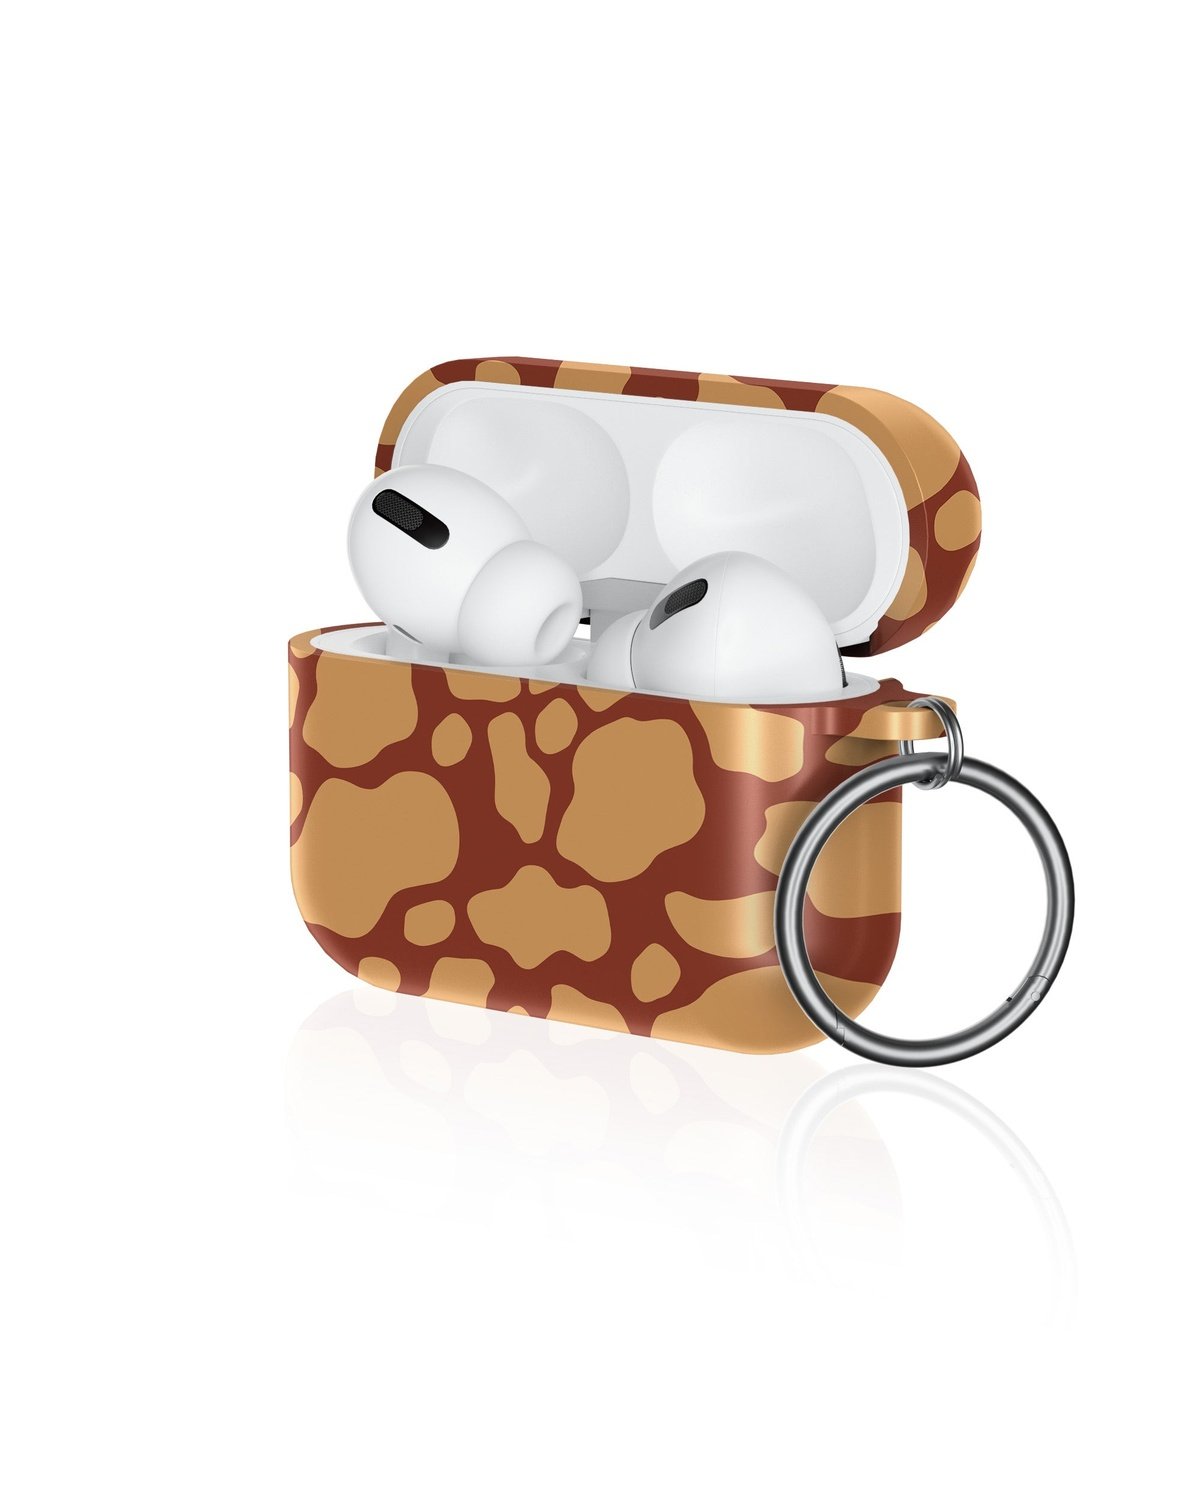 Biscuit Caramel Wave - Airpod Case-Pie Cake Airpod Cases-Tousphone-Airpod Pro 1&2-Tousphone